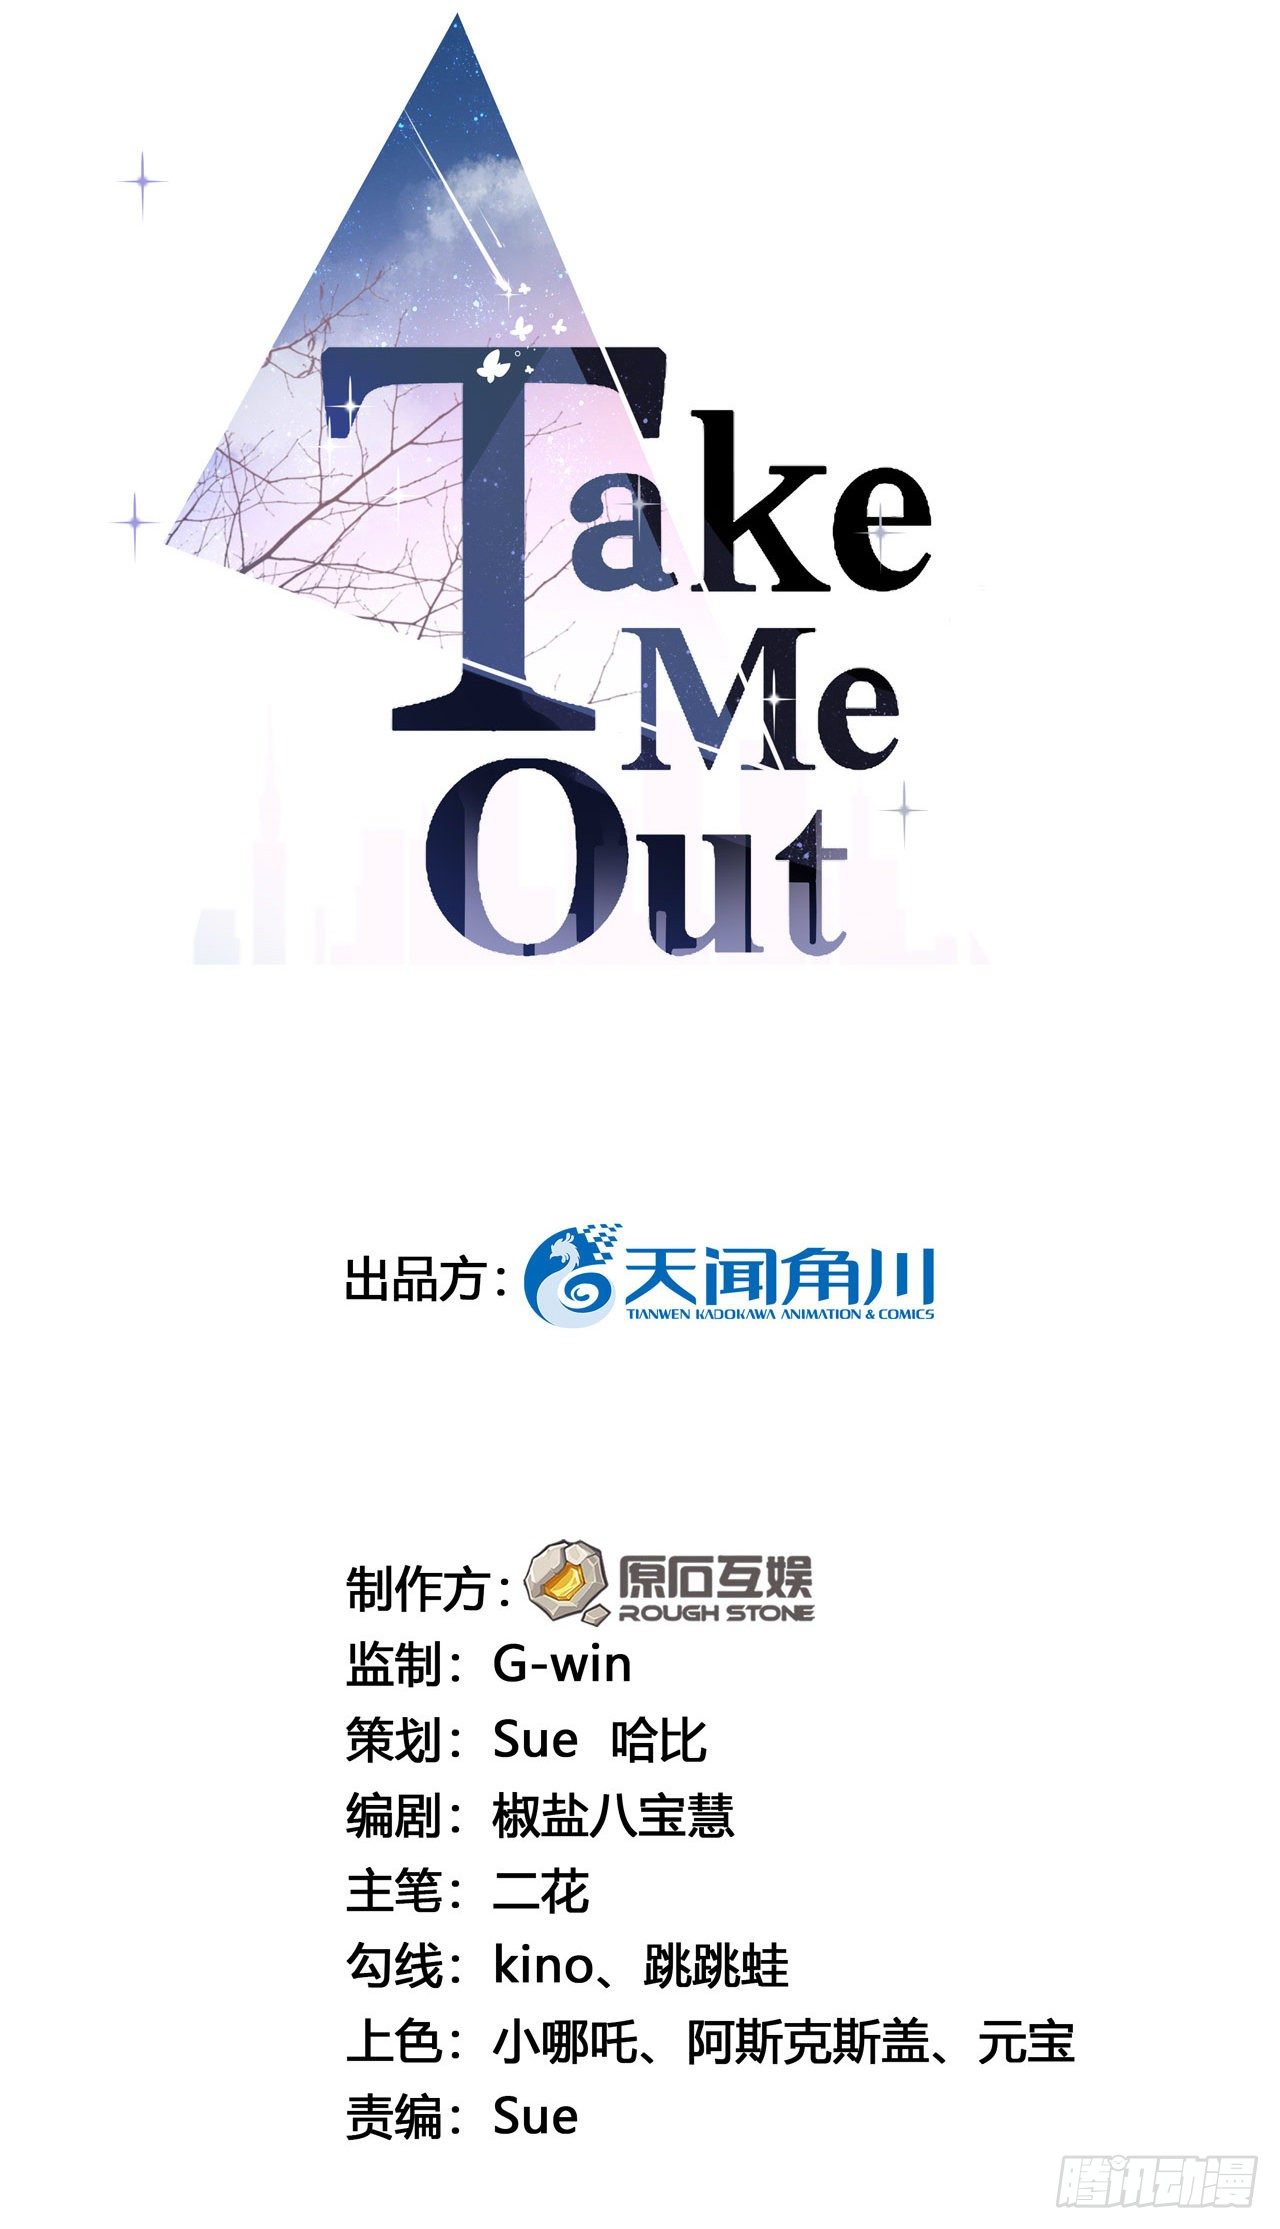 Take me out - 世上沒有無緣無故的愛 - 2